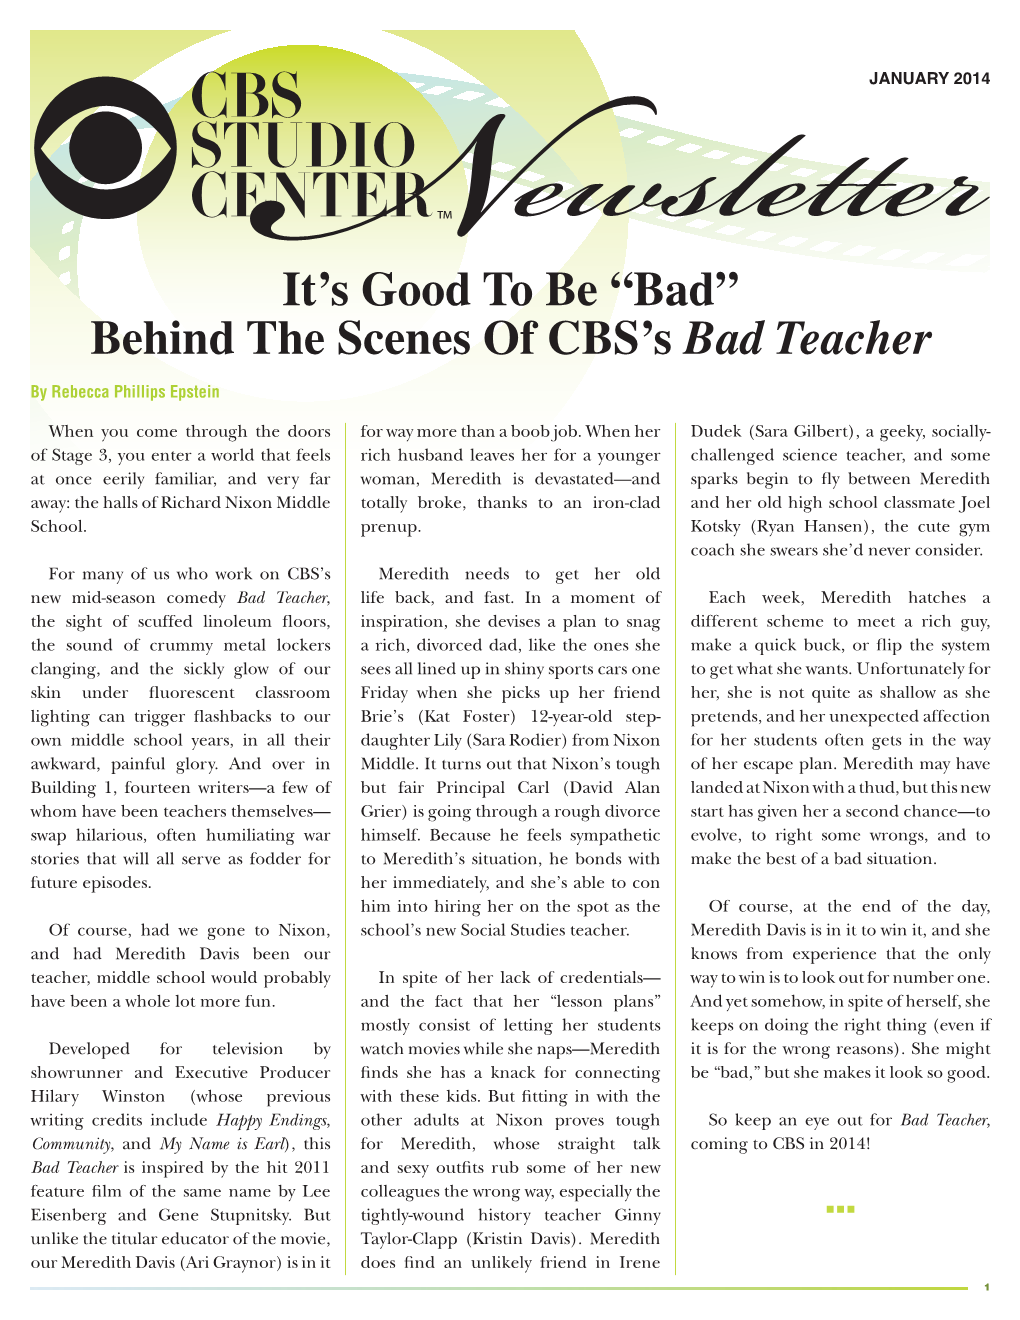 It's Good to Be “Bad” Behind the Scenes of CBS's Bad Teacher